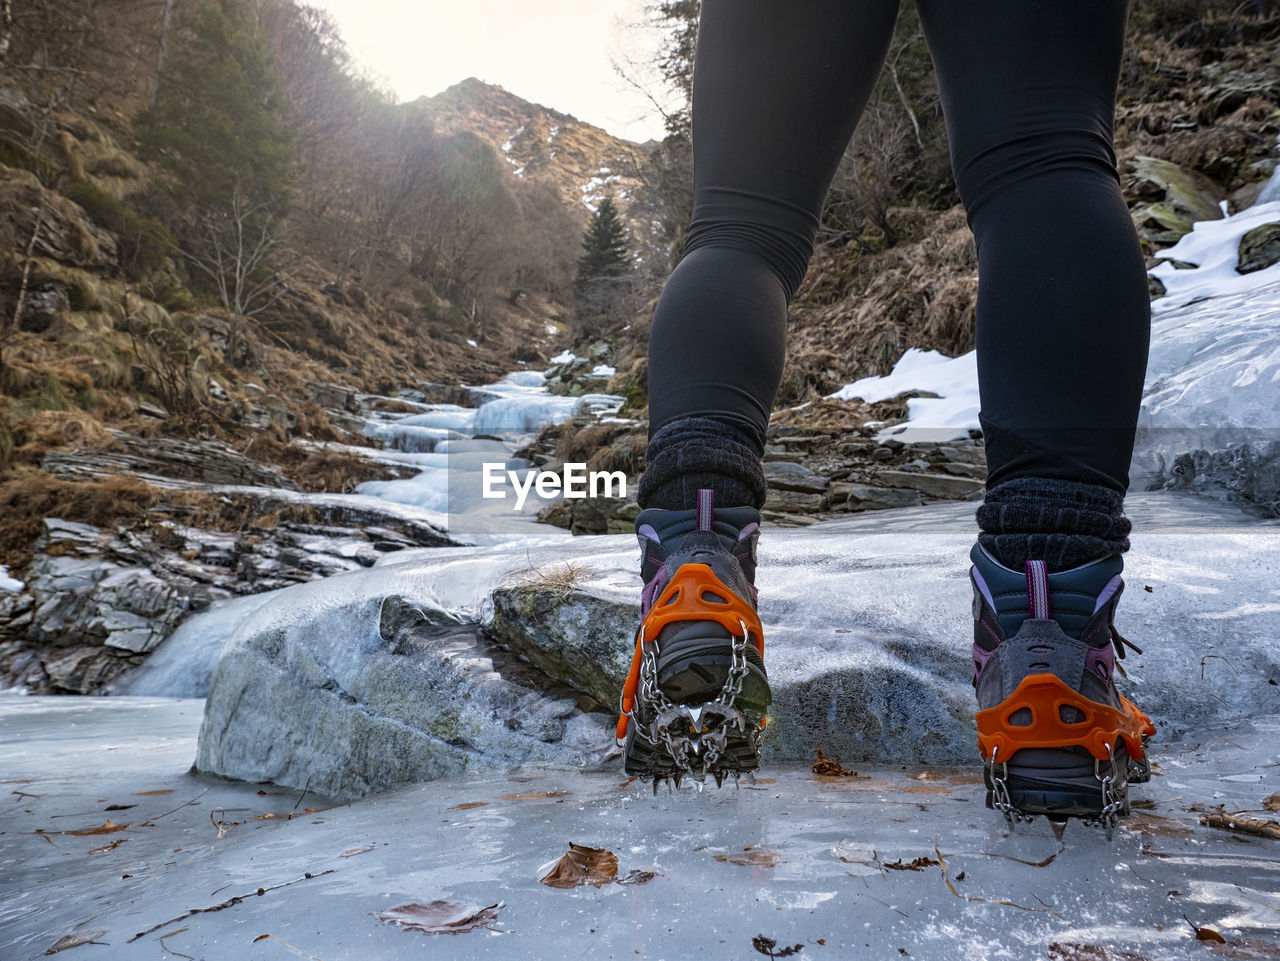 Trekking boots on an iced river